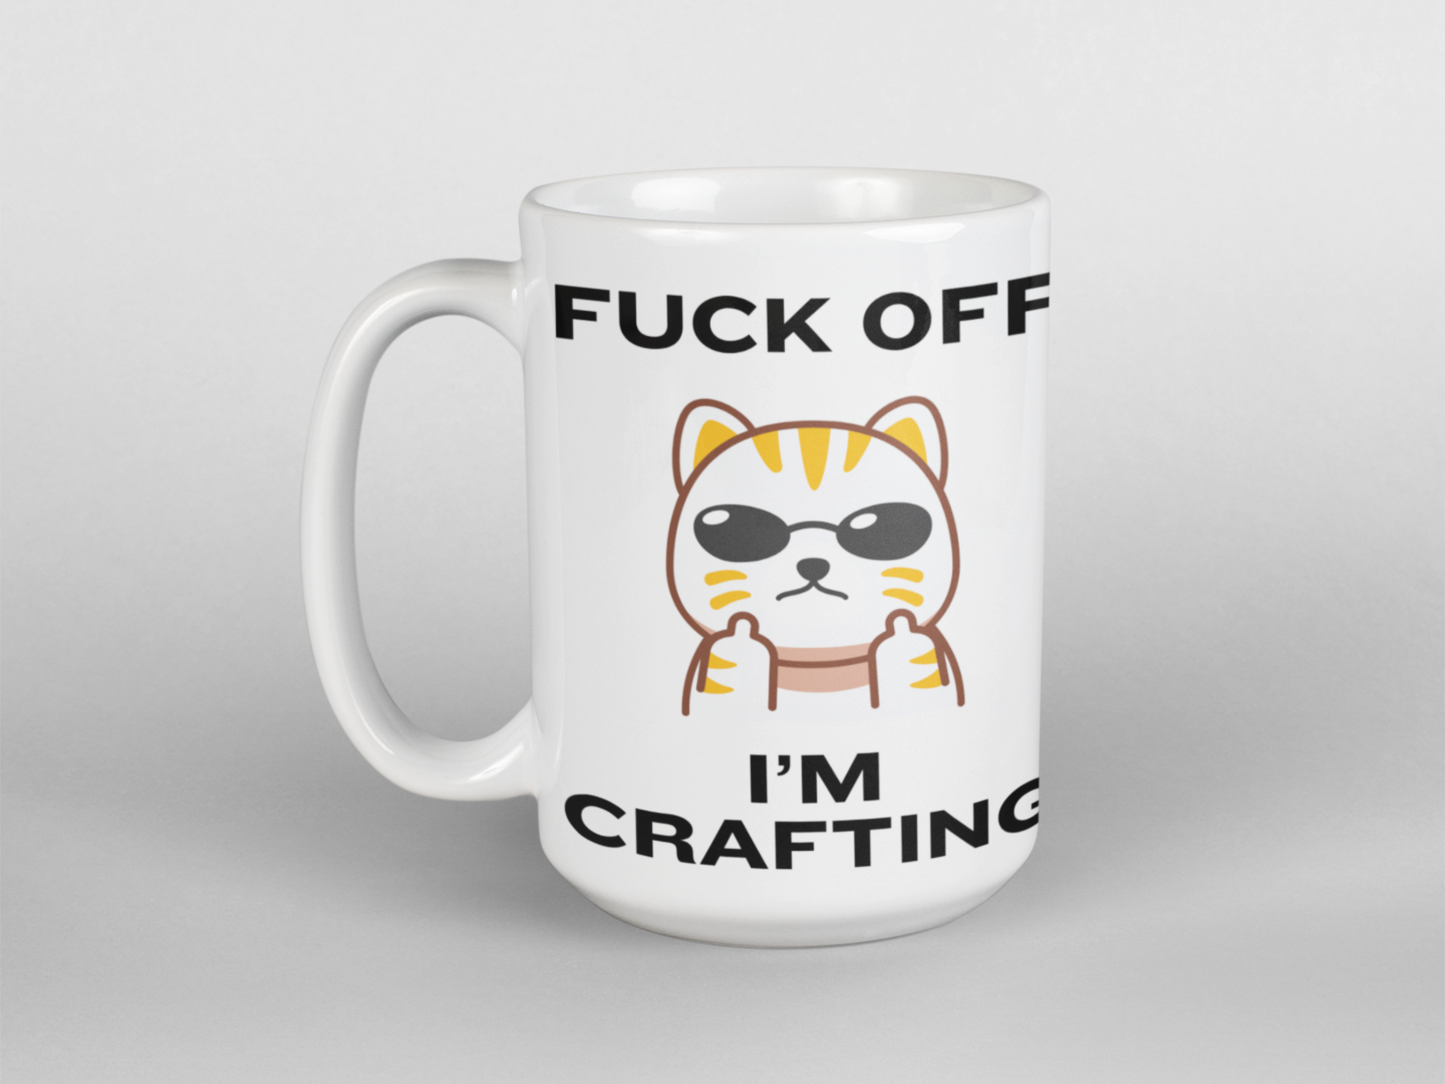 Fuck off I'm crafting funny coffee mug